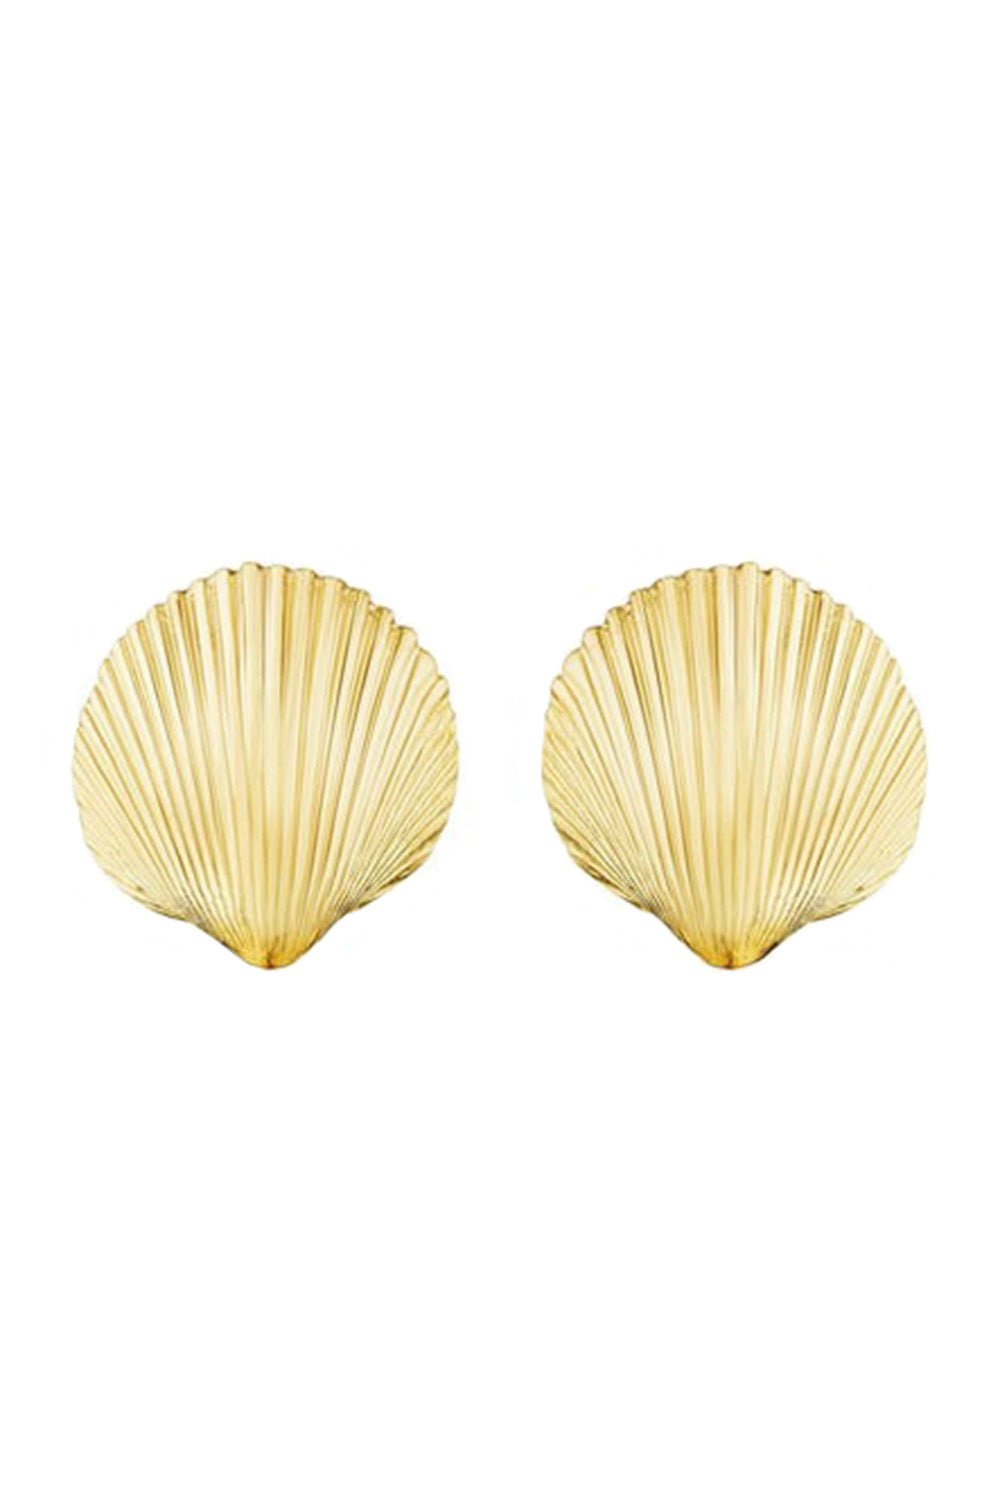 CADAR-Small Shell Stud Earrings-YELLOW GOLD